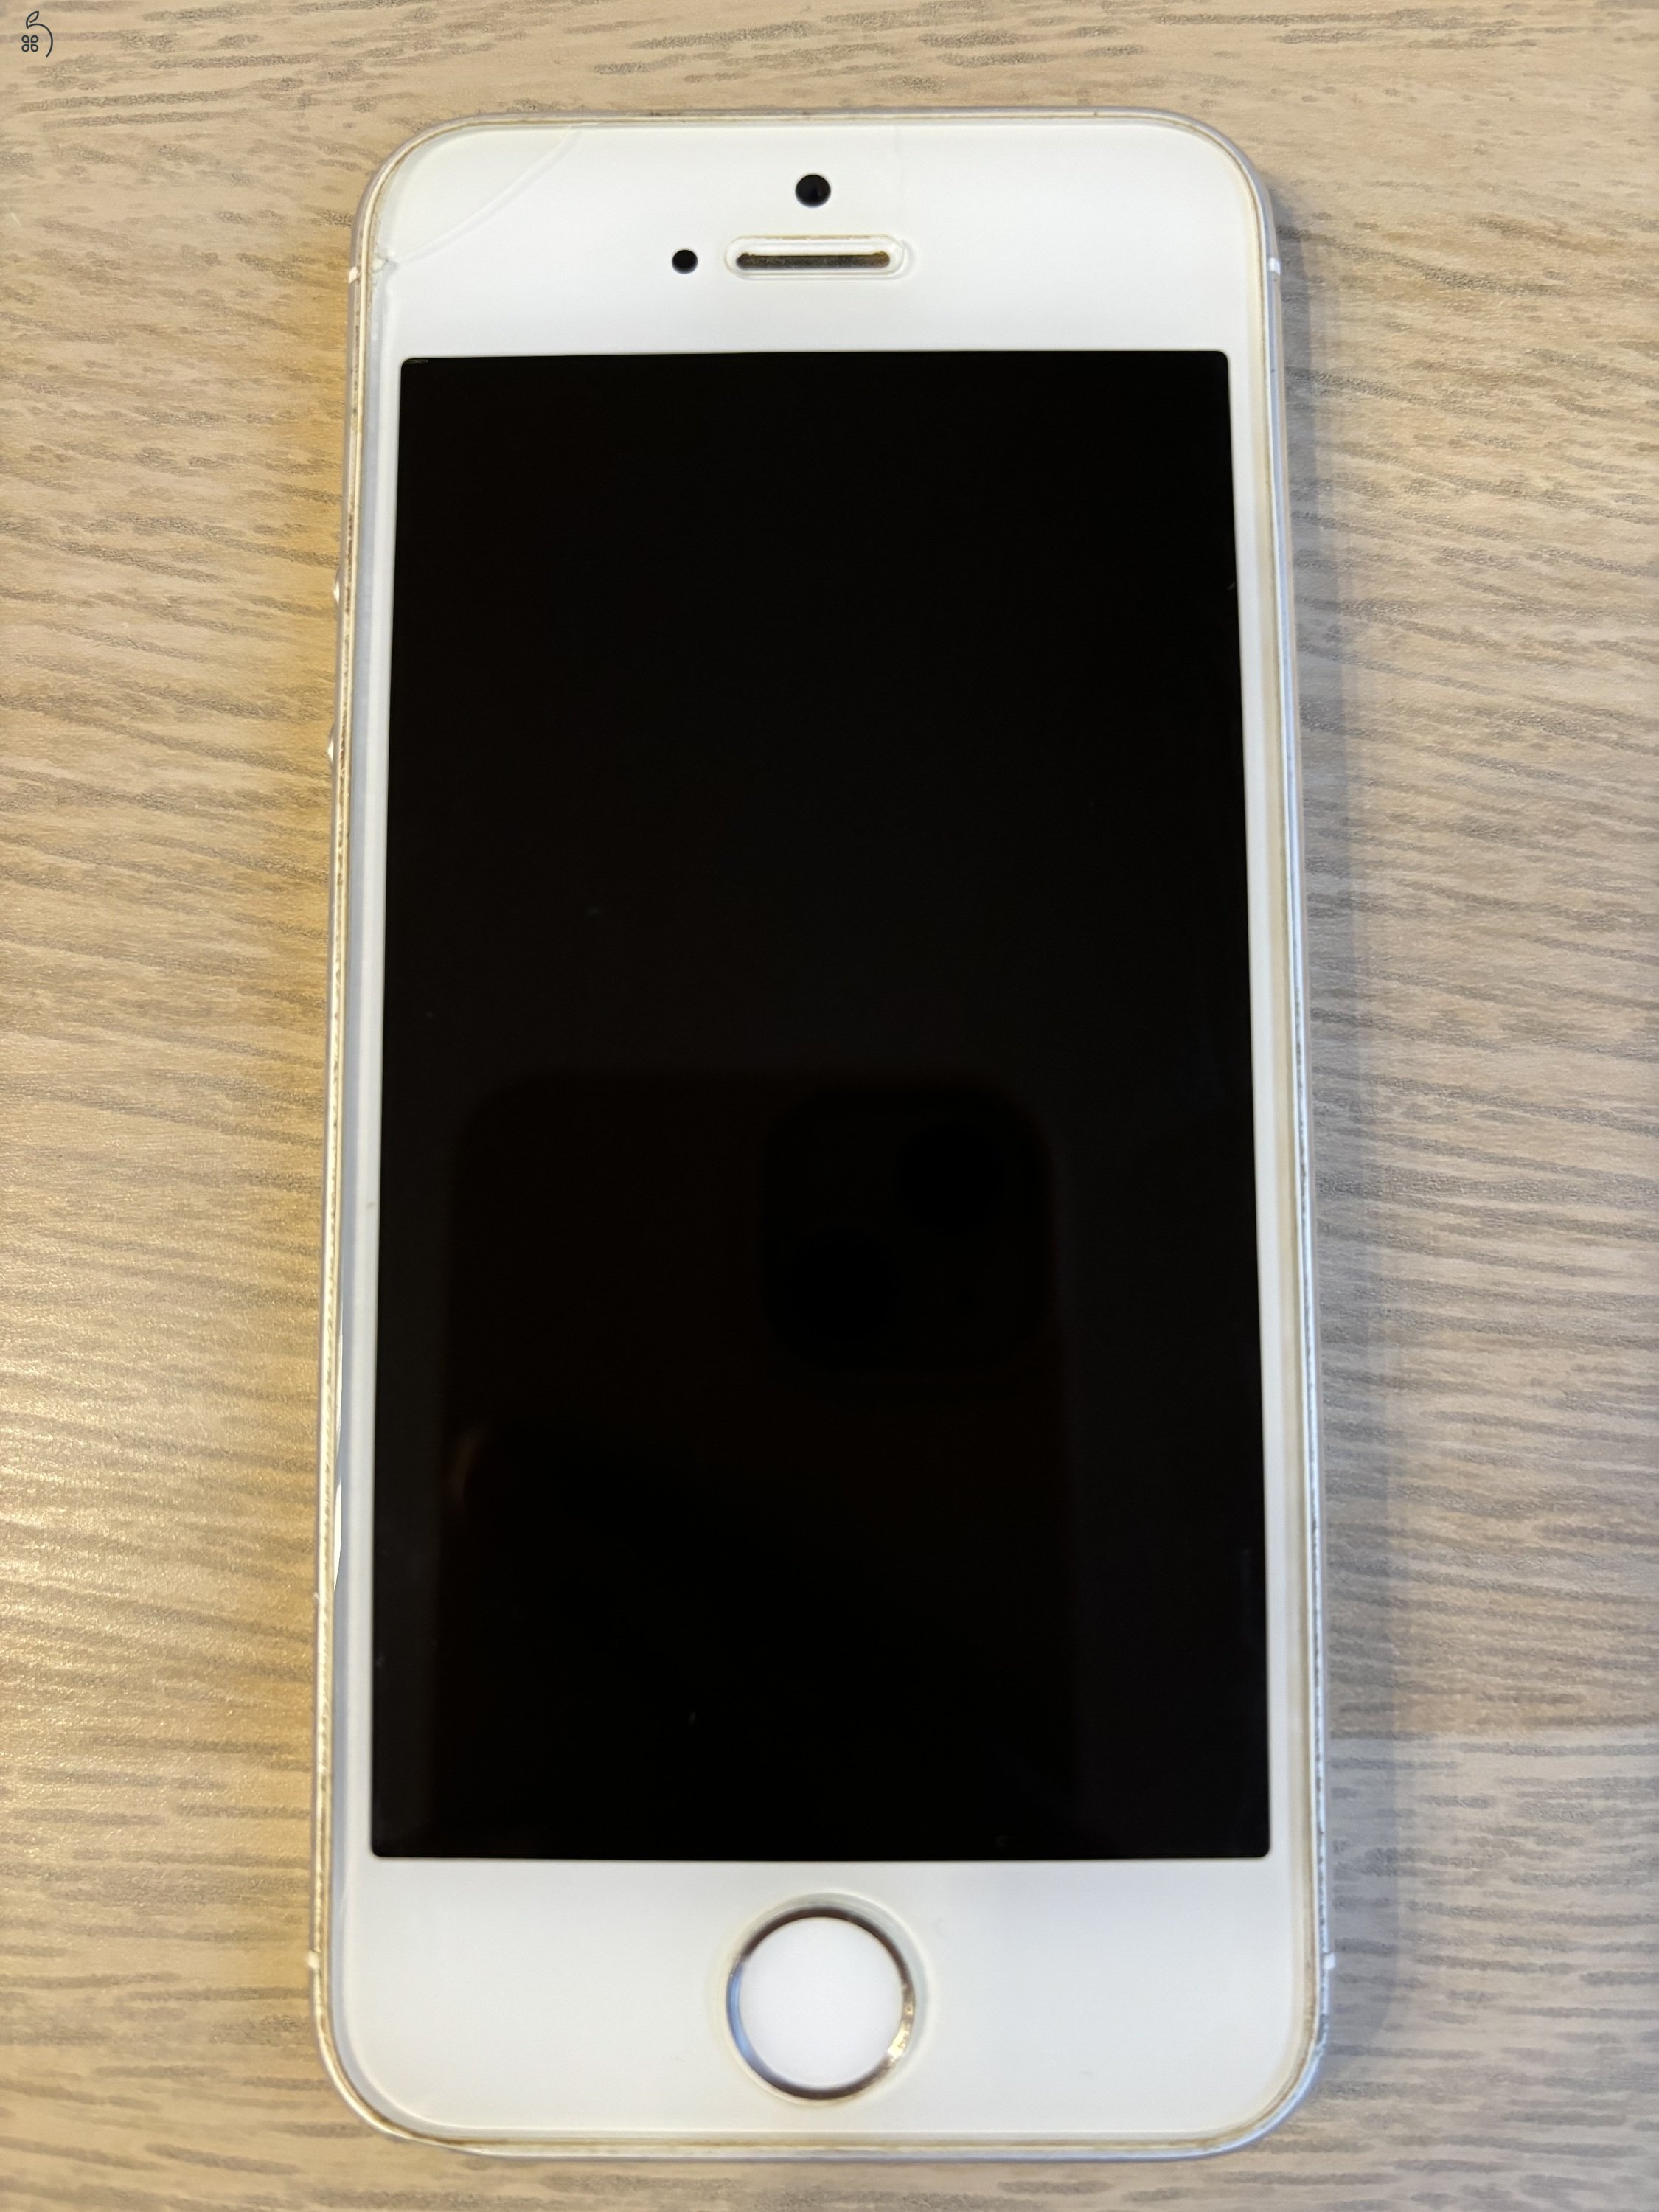 Apple iPhone 5S 16GB Telekom függő, ezüst